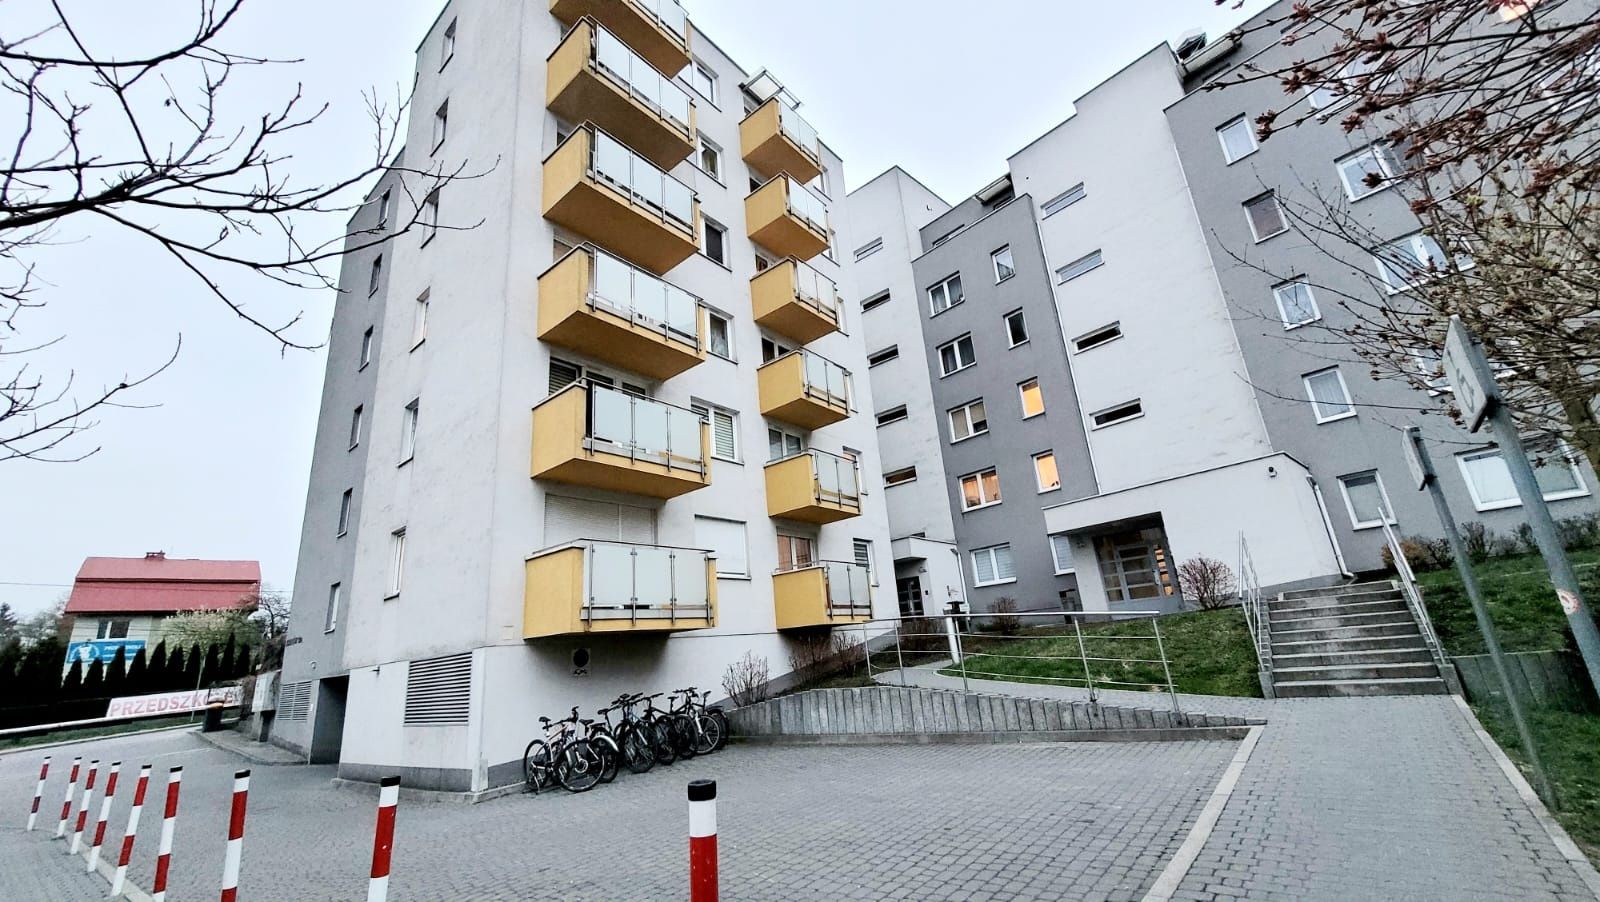 Apartament LOFT, 4 os, balkon, parking GRATIS, 2 pok, Borek Fałęcki